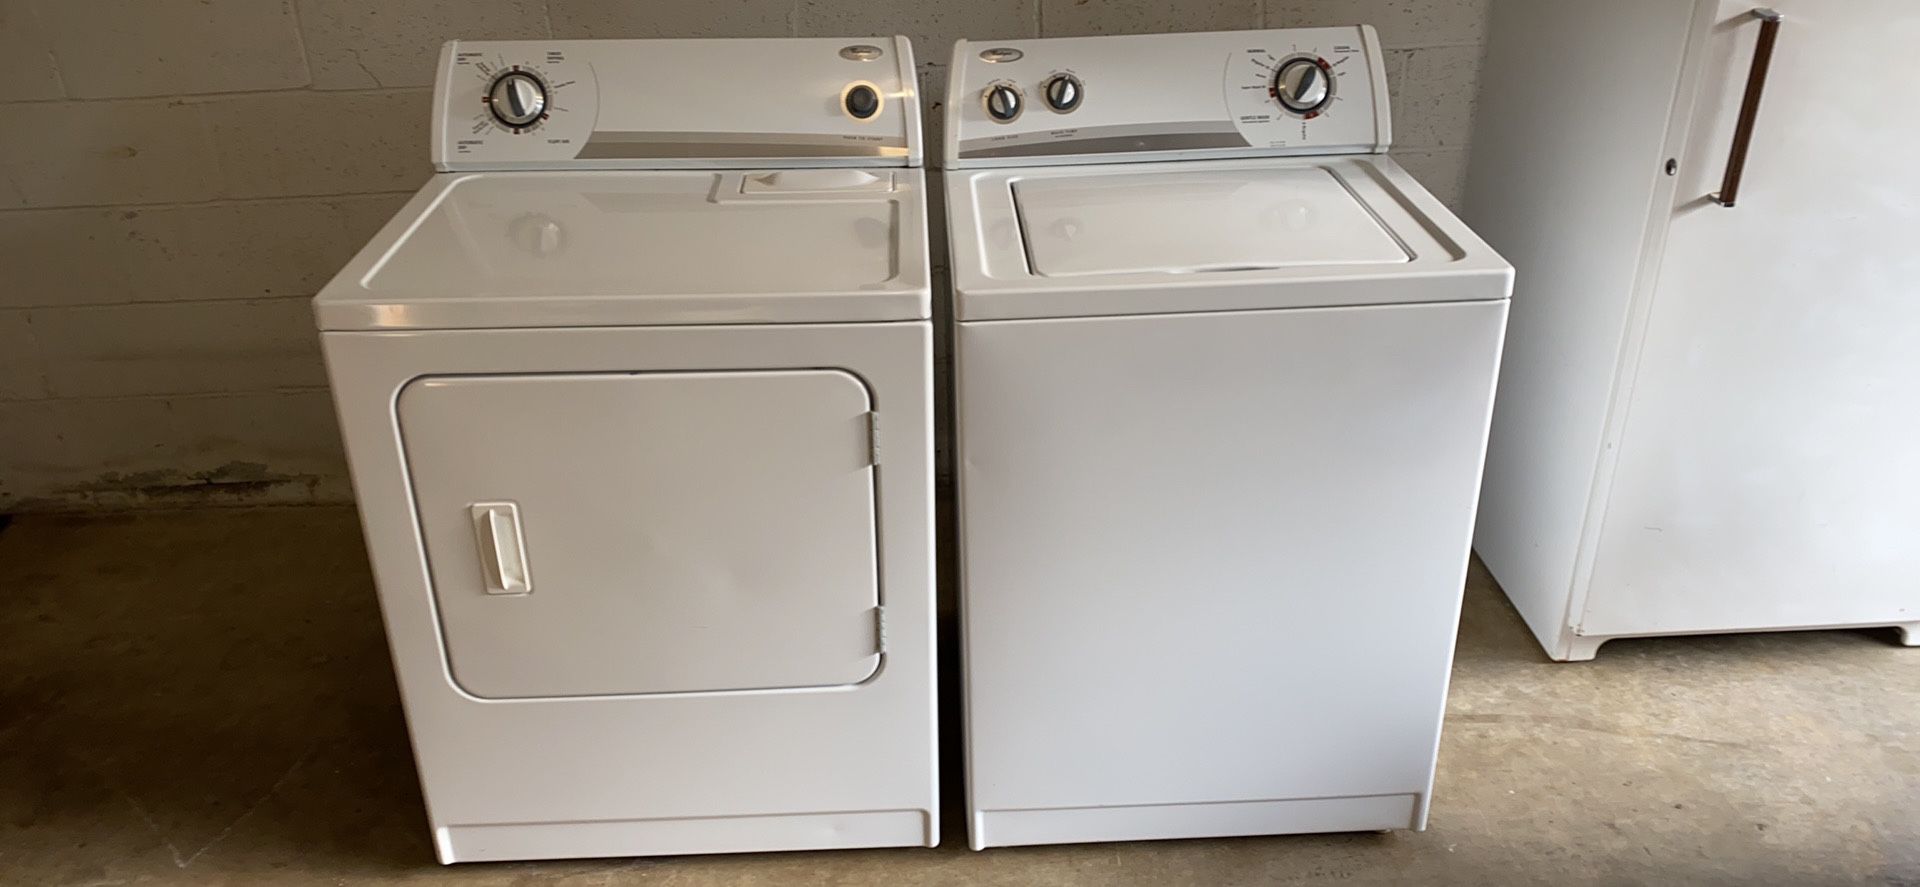 Whirlpool Washer & Dryer Set (White)